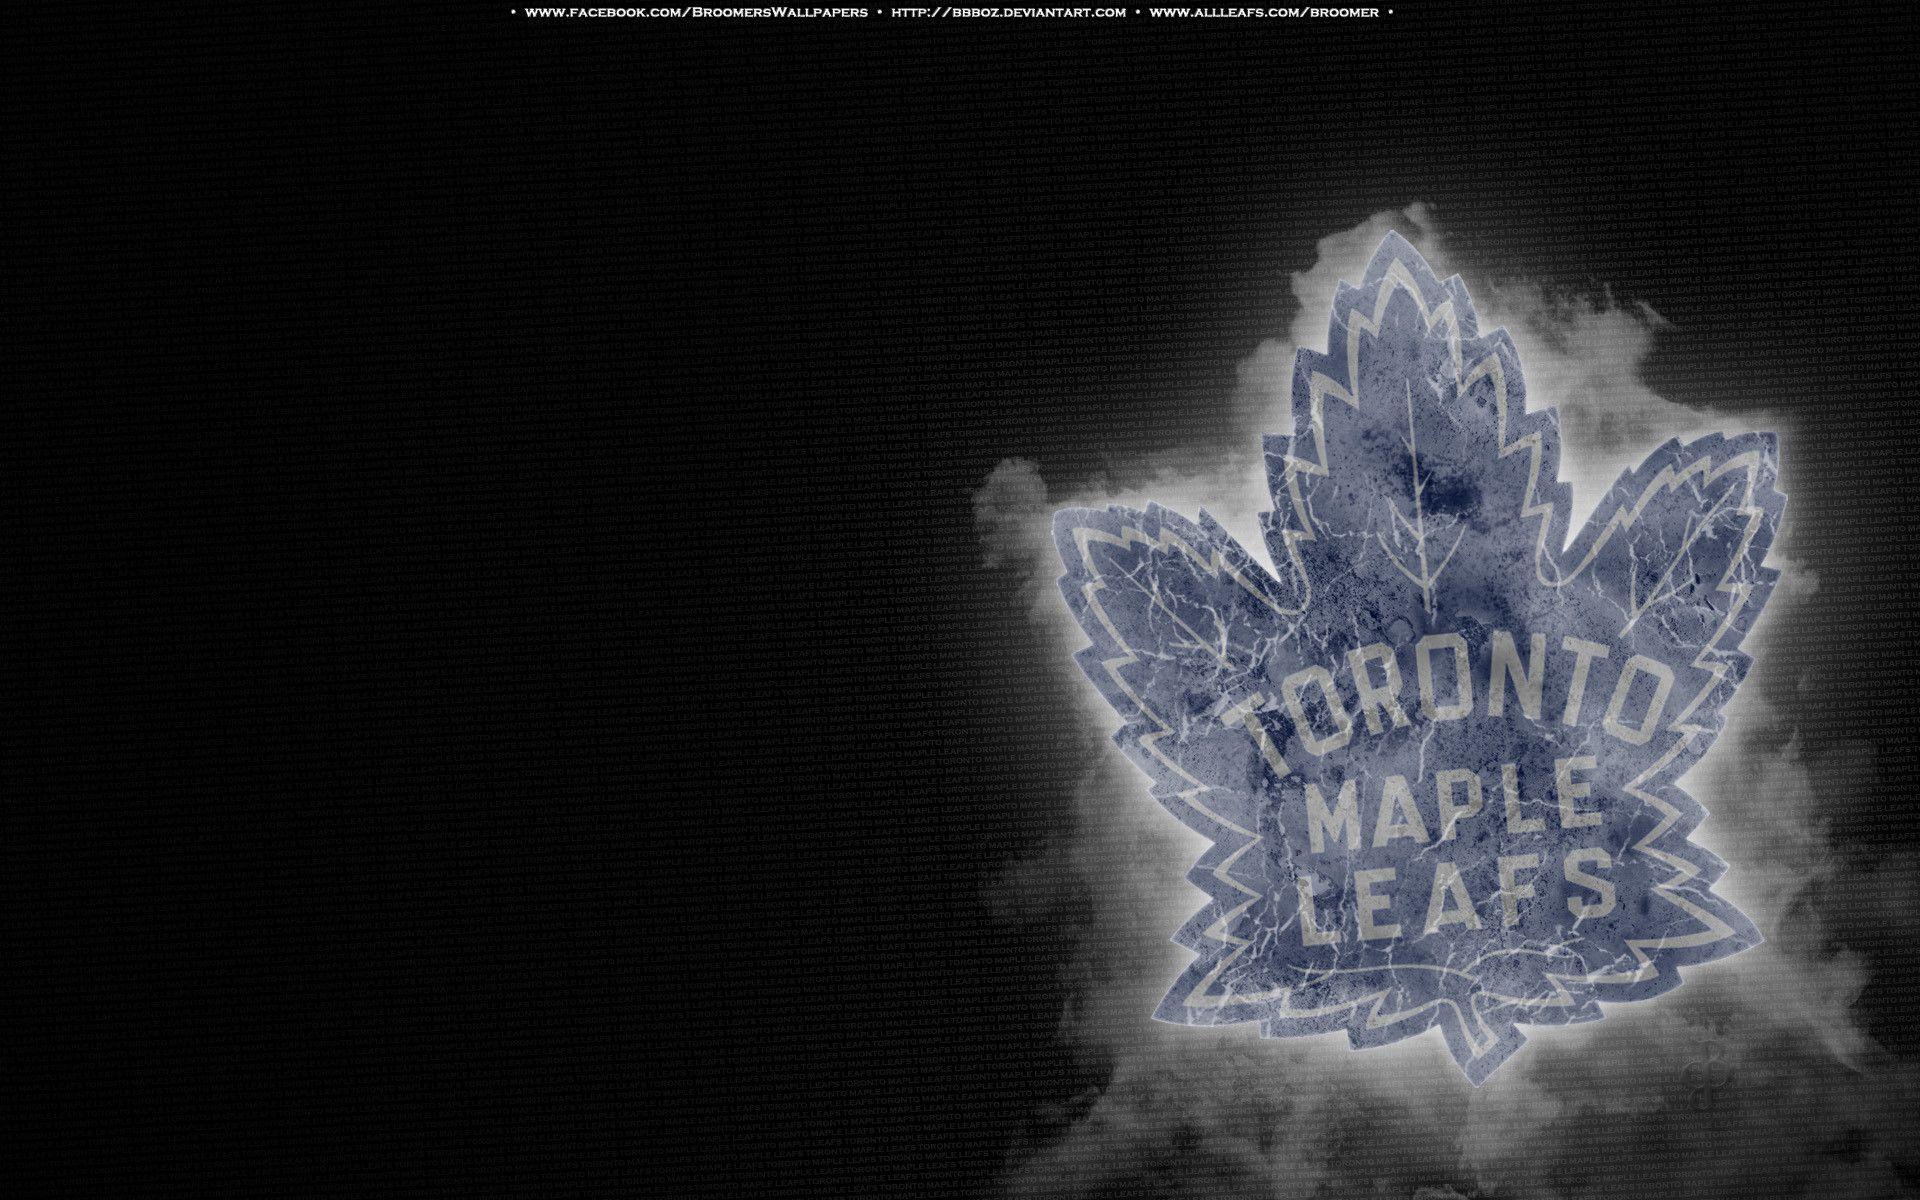 Toronto Maple Leafs wallpaper. Toronto Maple Leafs background